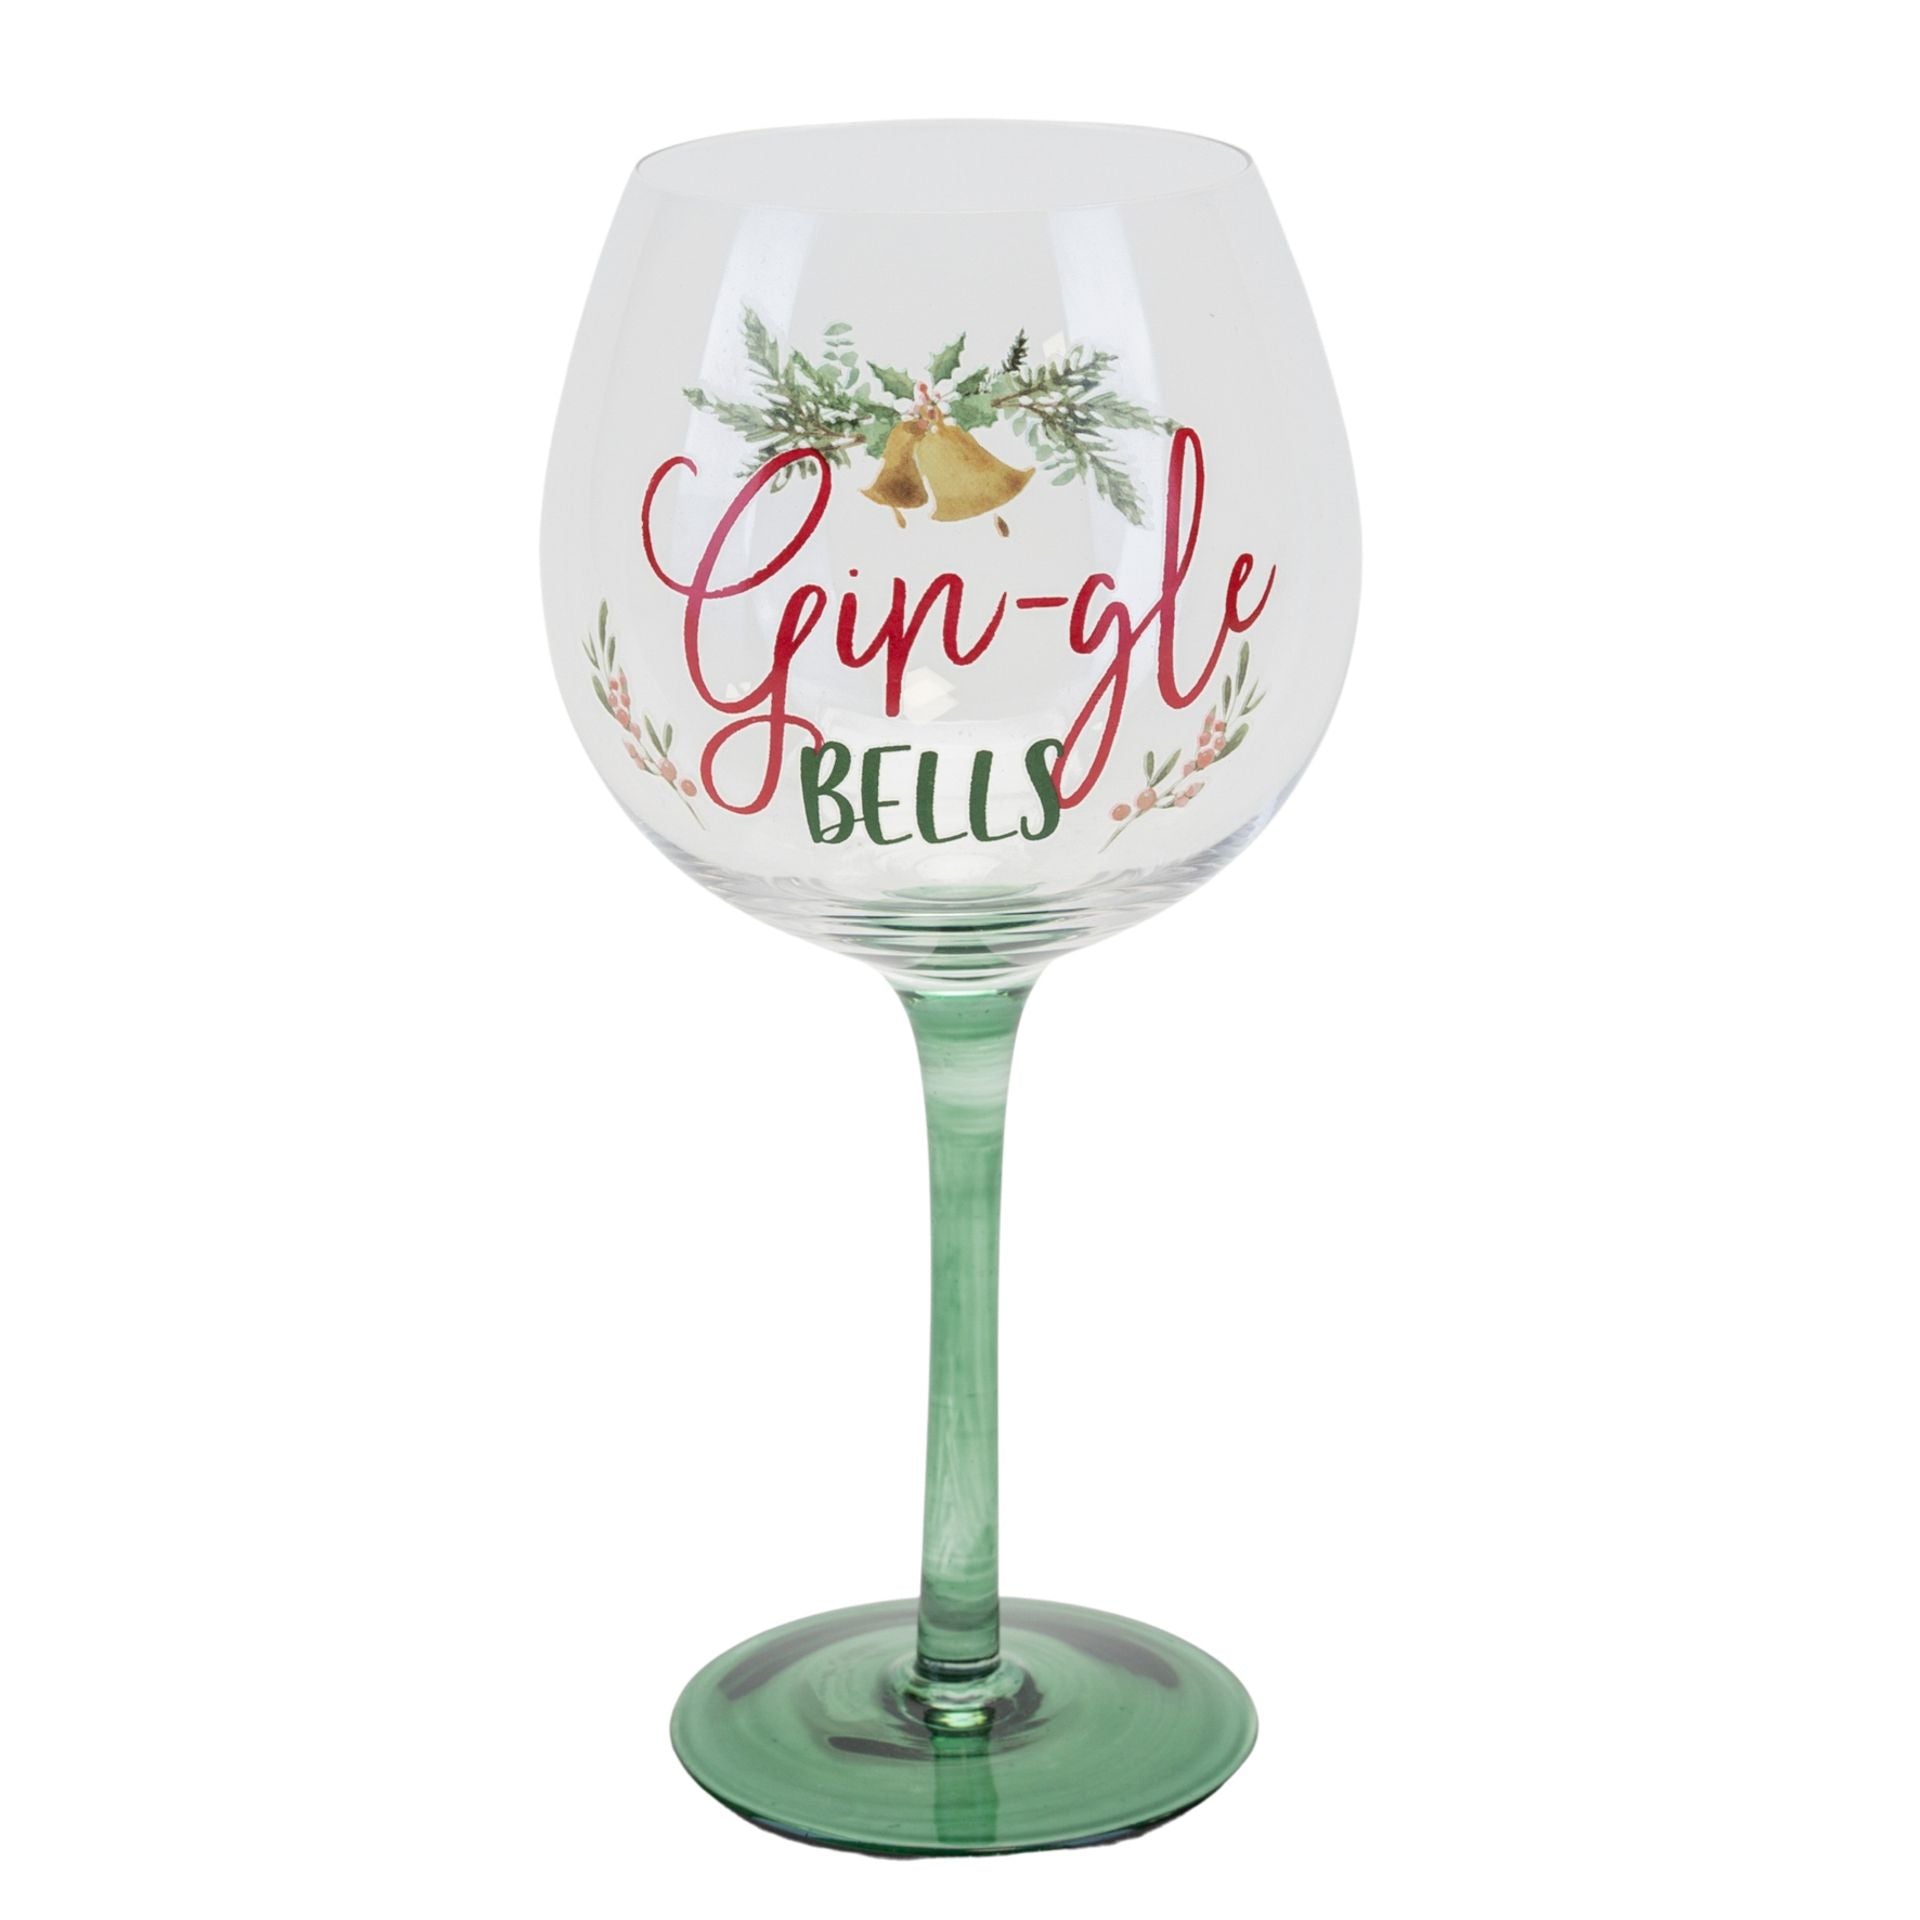 Christmas Gin Glass - 'Gin-gle' Bells